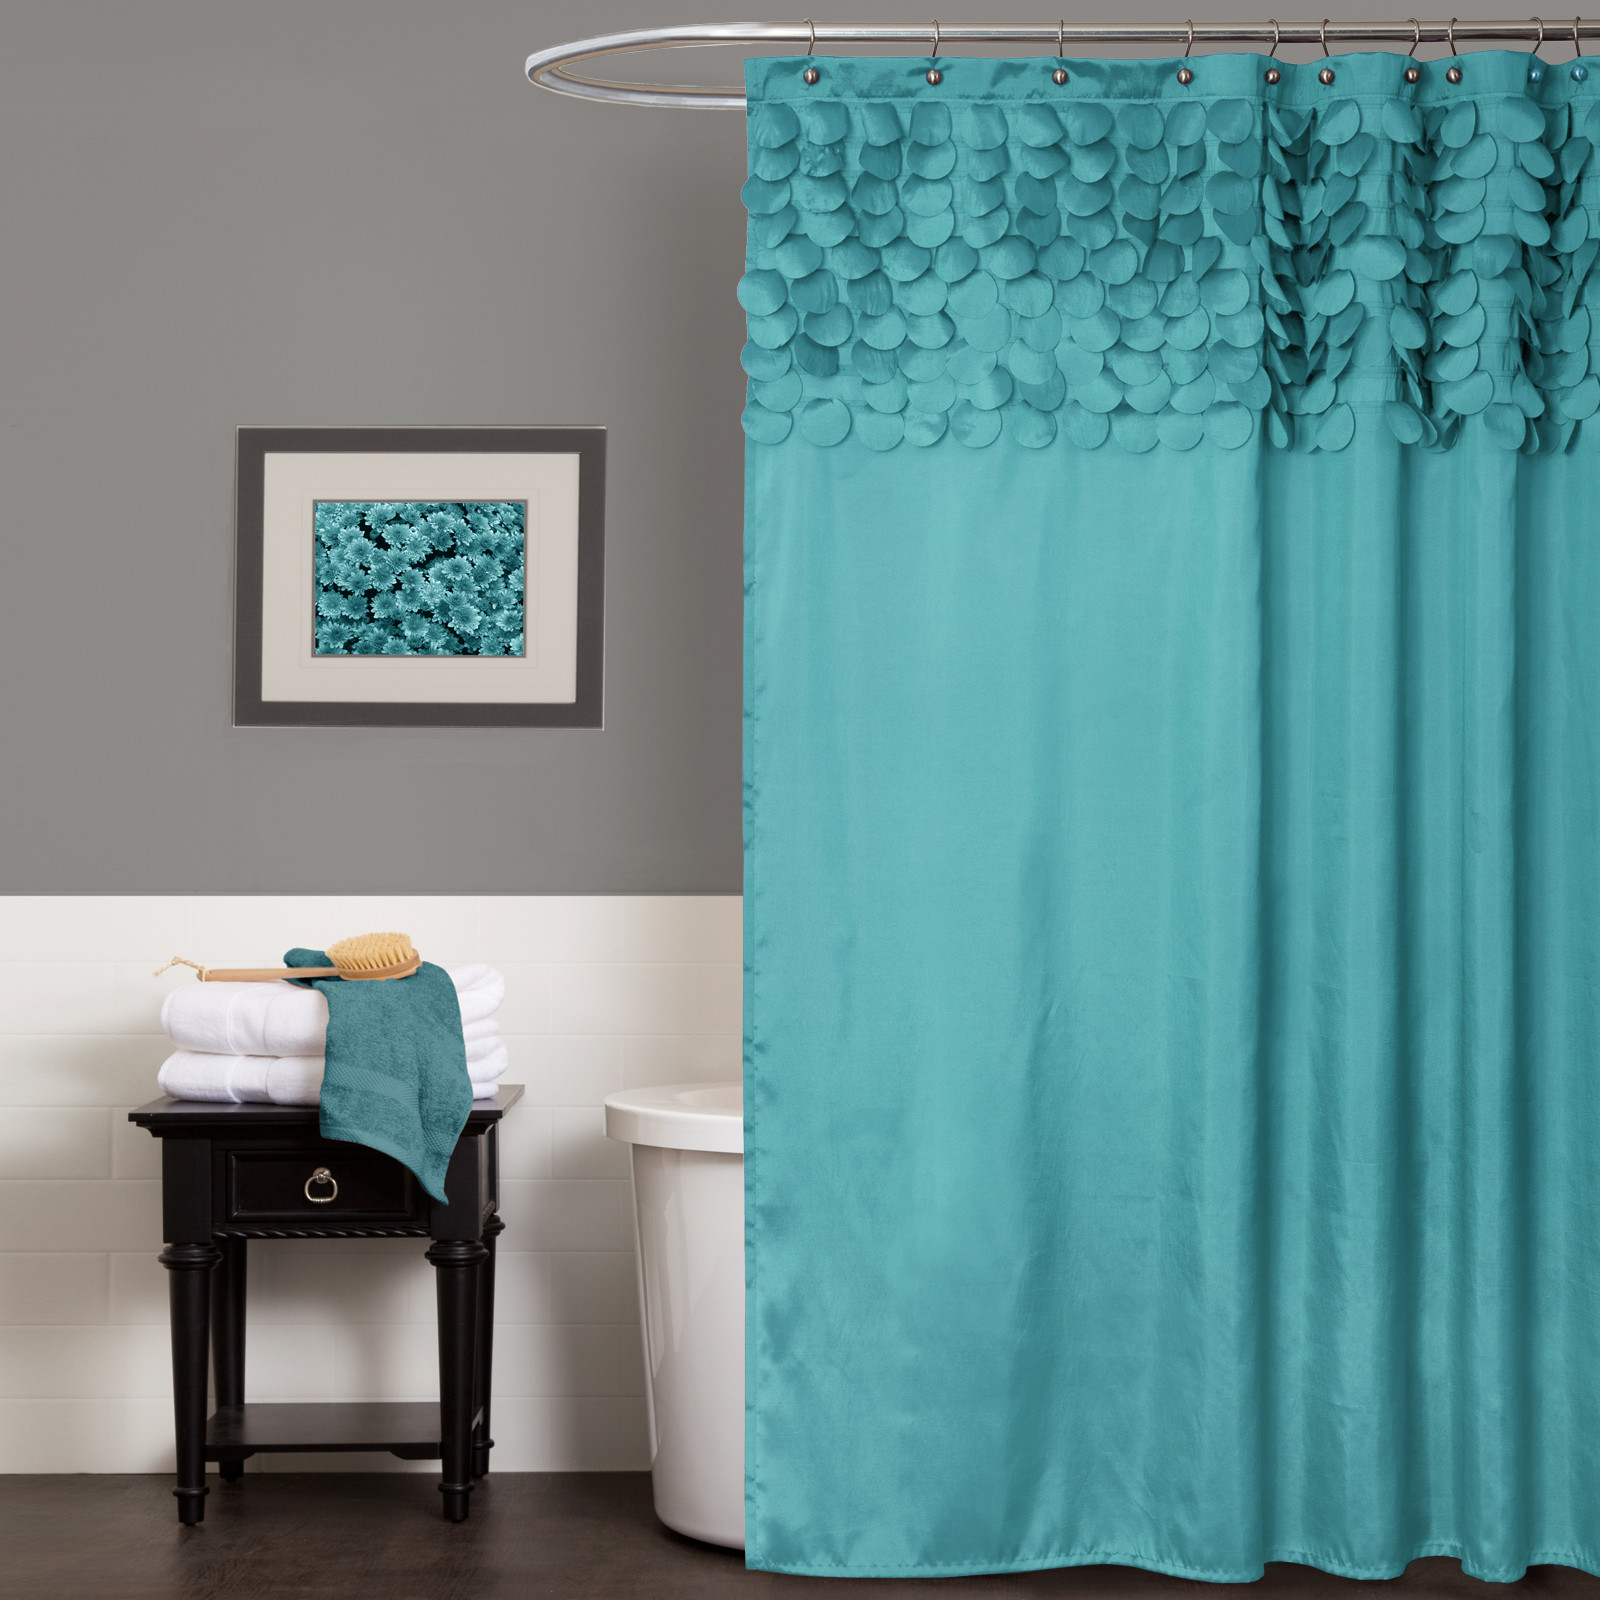 Bathroom Sets With Shower Curtain
 Lush Decor Lillian Shower Curtain Home Bed & Bath